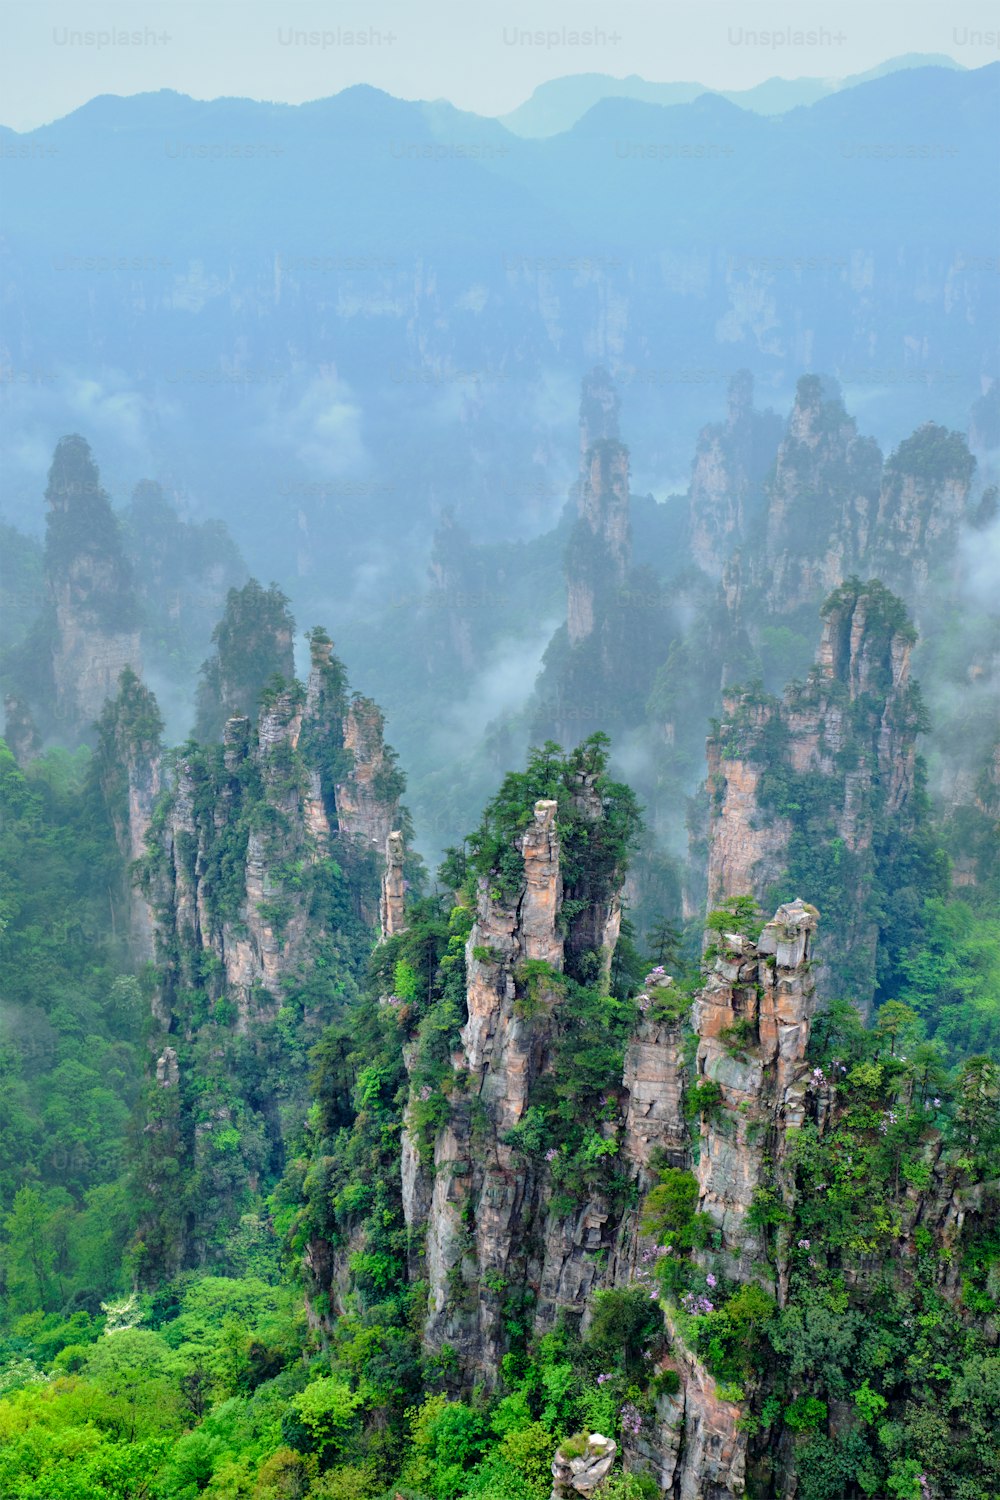 Berühmte Touristenattraktion von China - Zhangjiajie Steinsäulen Klippen Berge in Nebelwolken bei Wulingyuan, Hunan, China